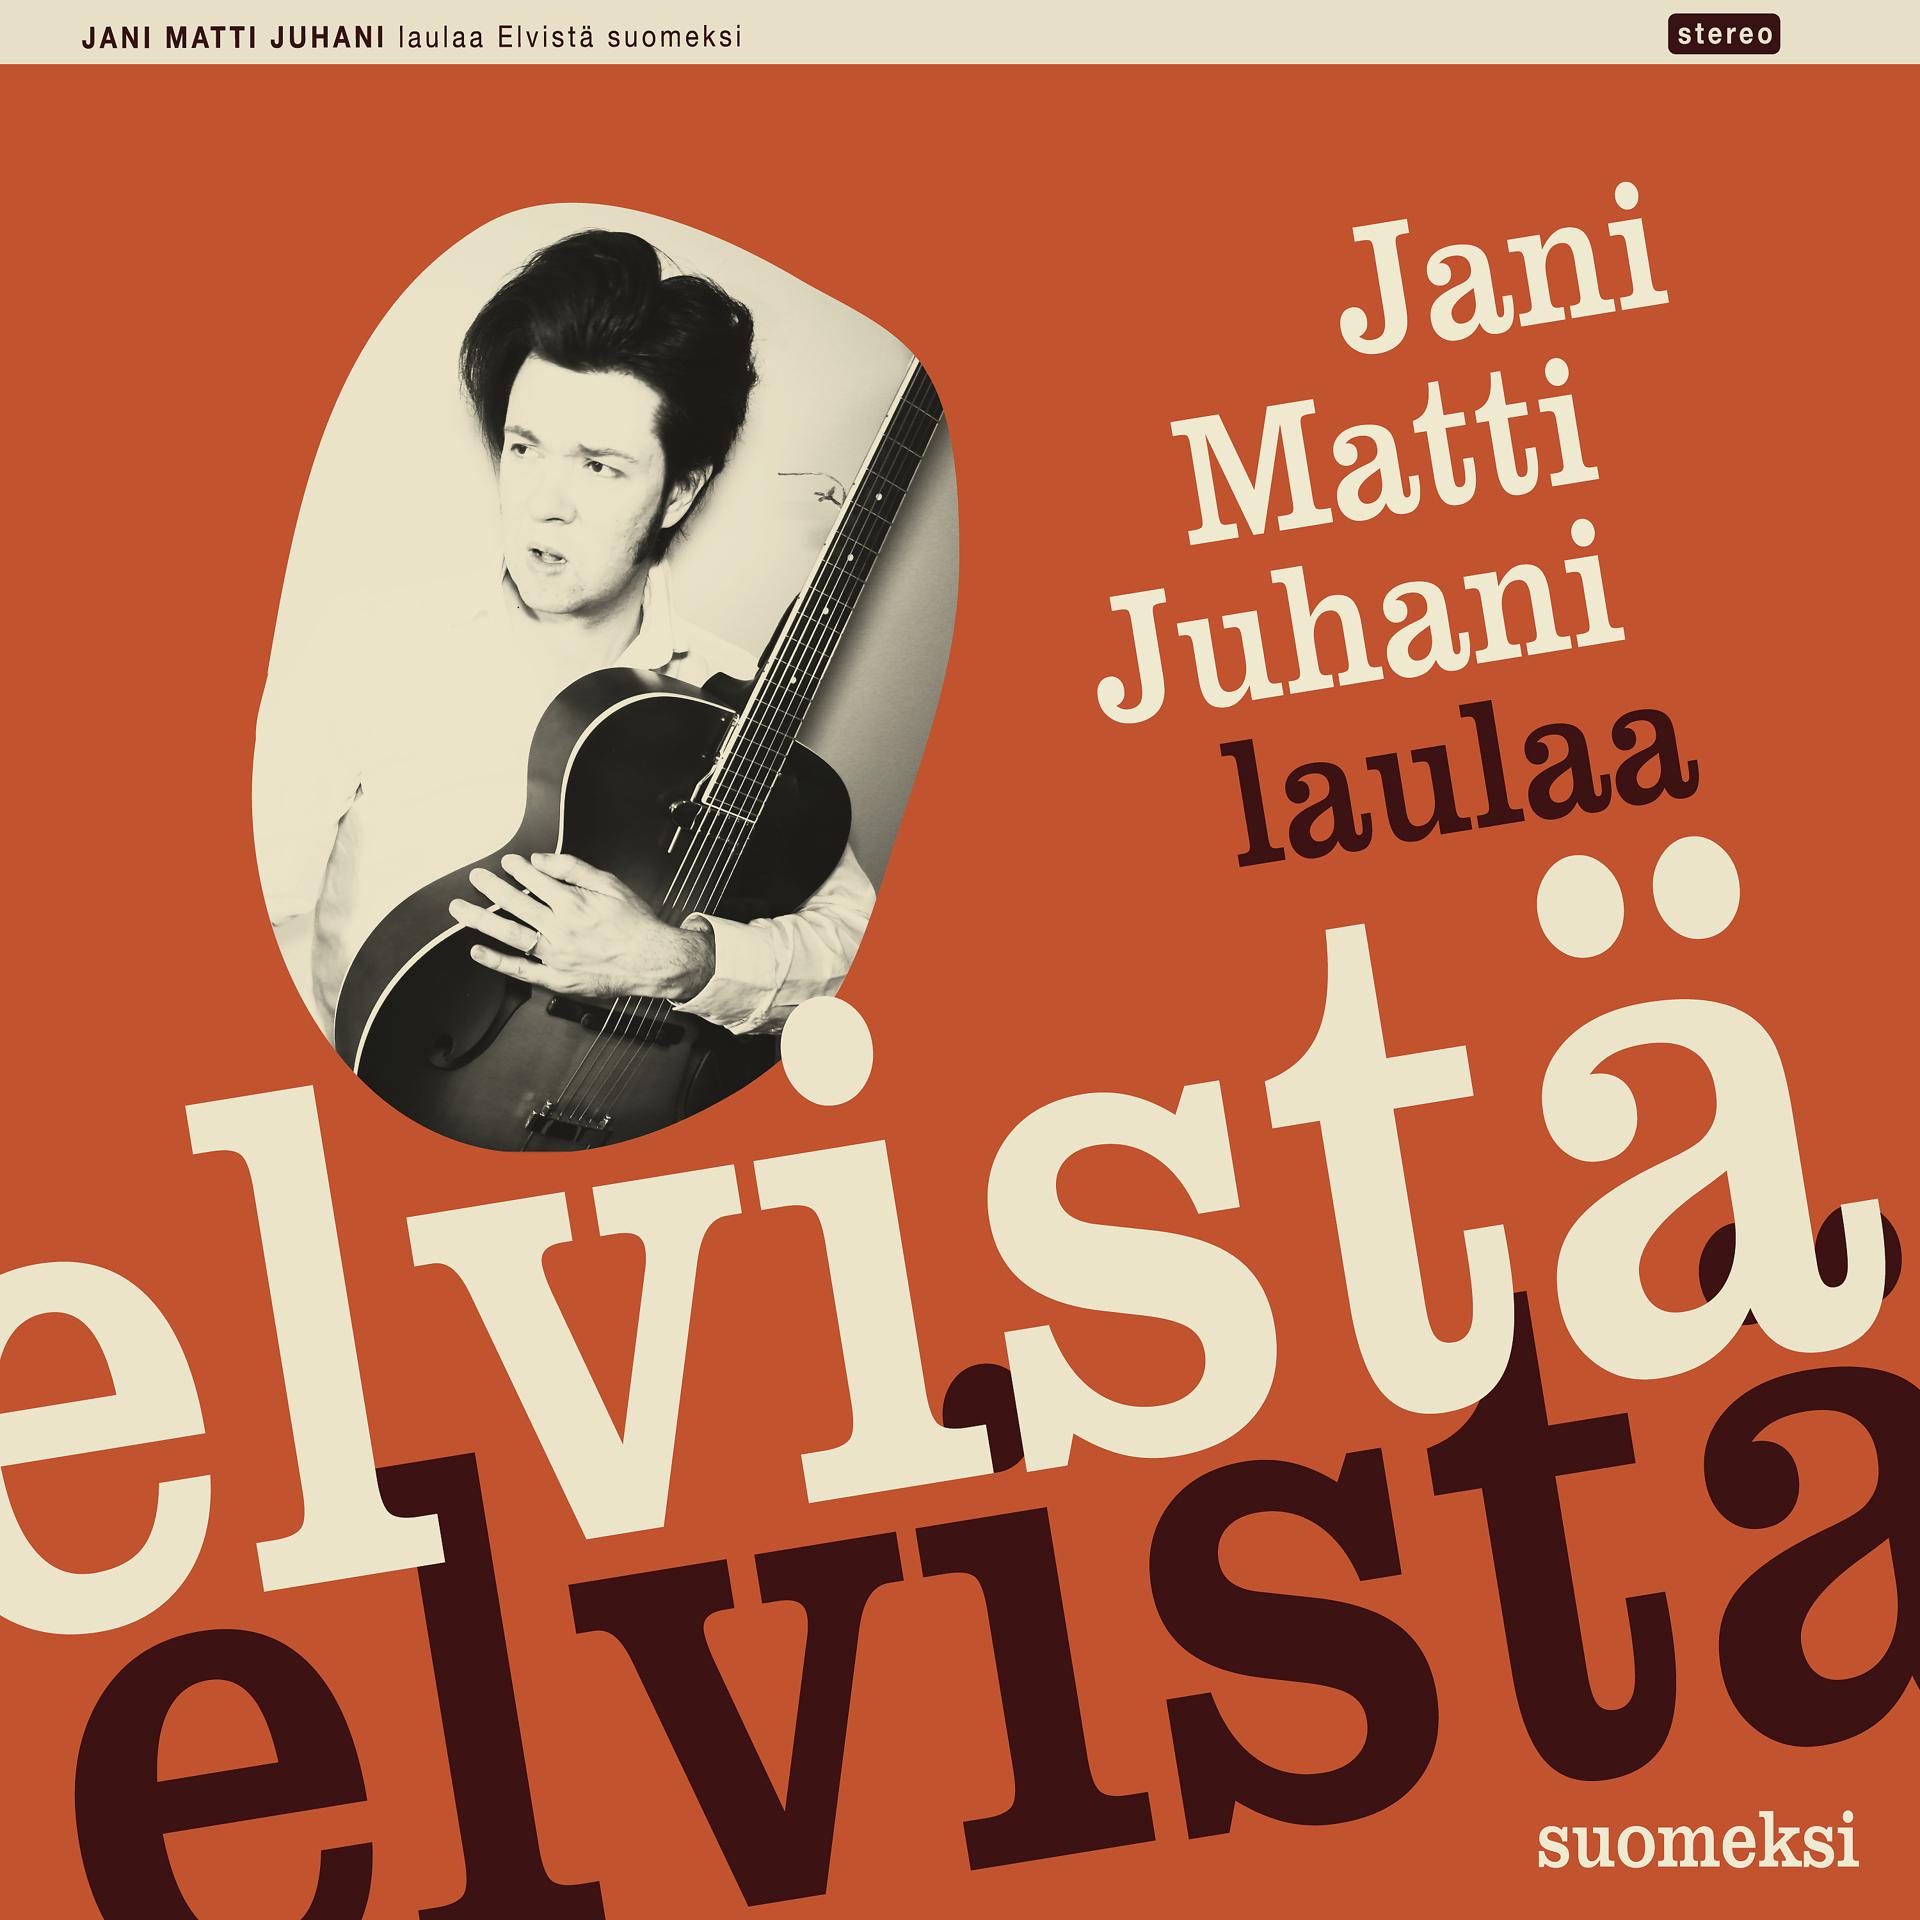 Постер к треку Jani Matti Juhani - Piru valepuvussa